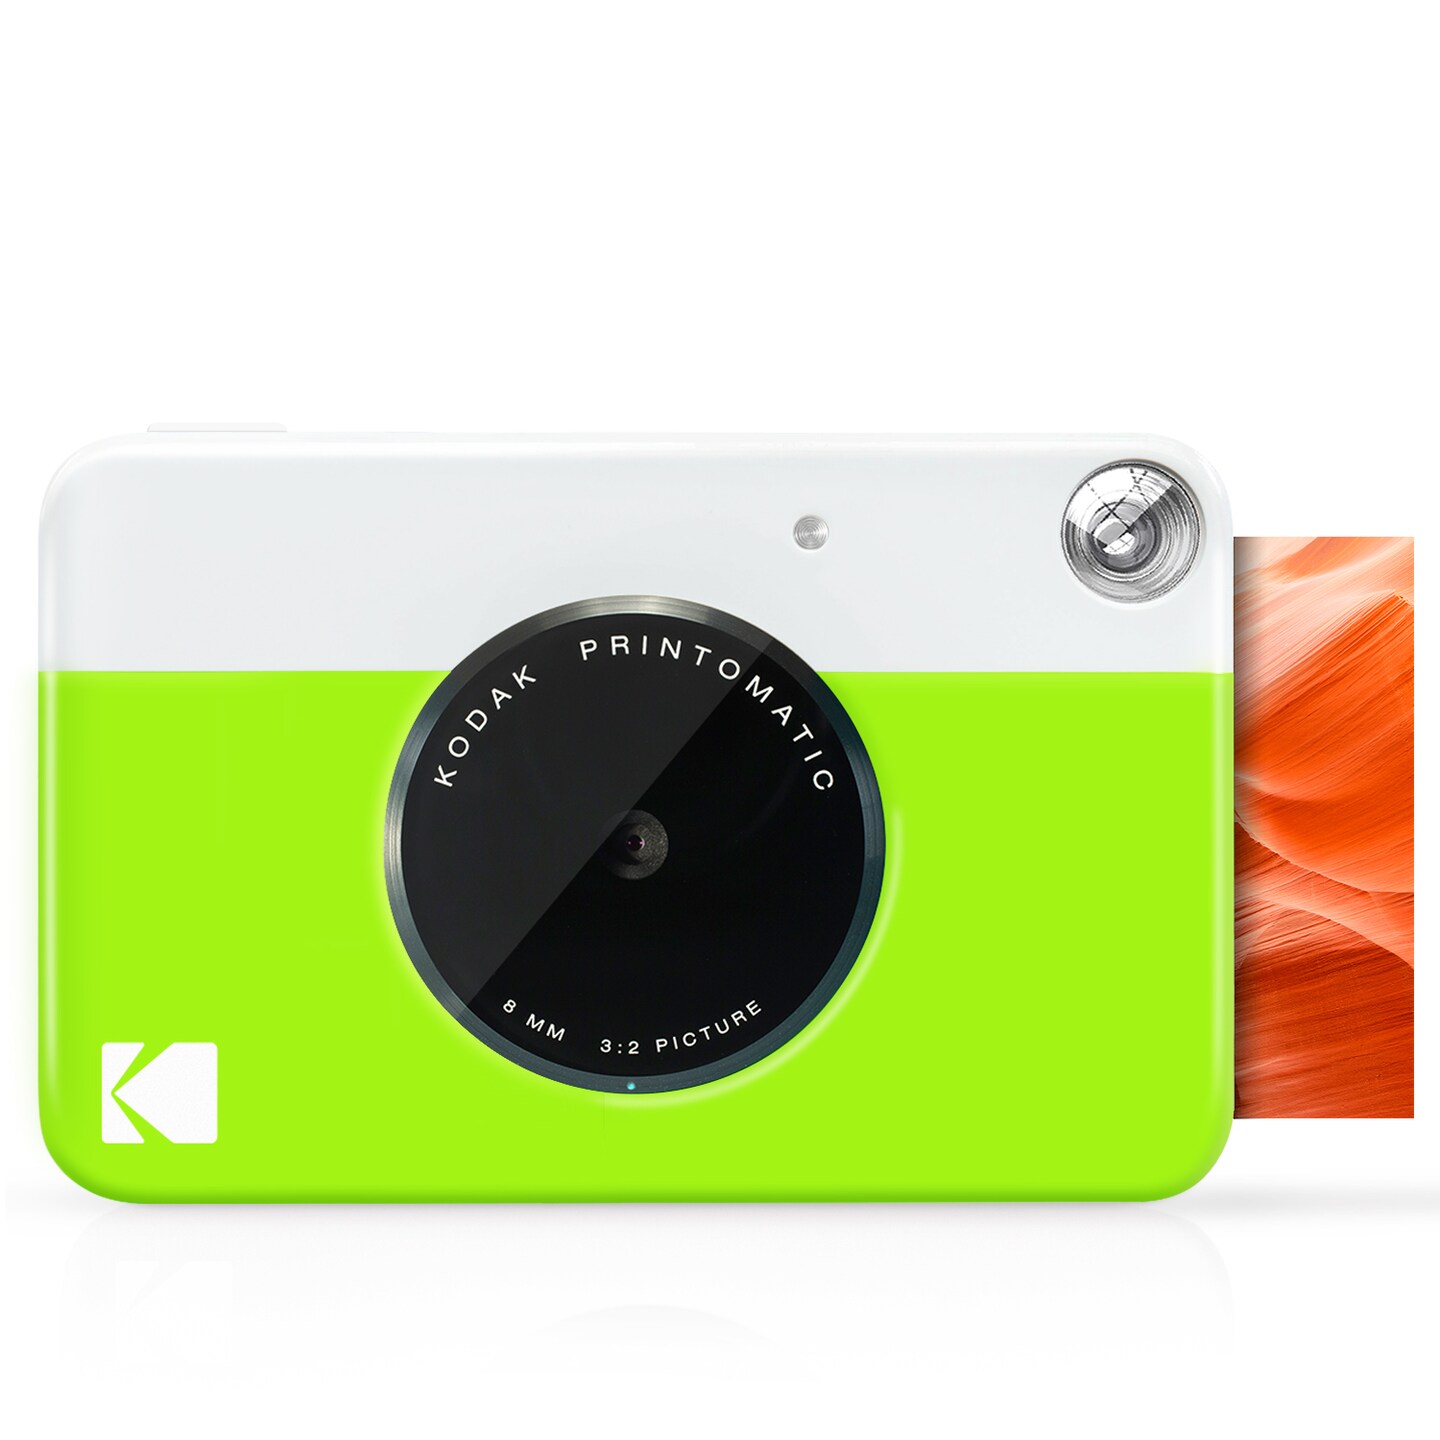 KODAK Printomatic Digital Instant Print Camera, Supports Sticky